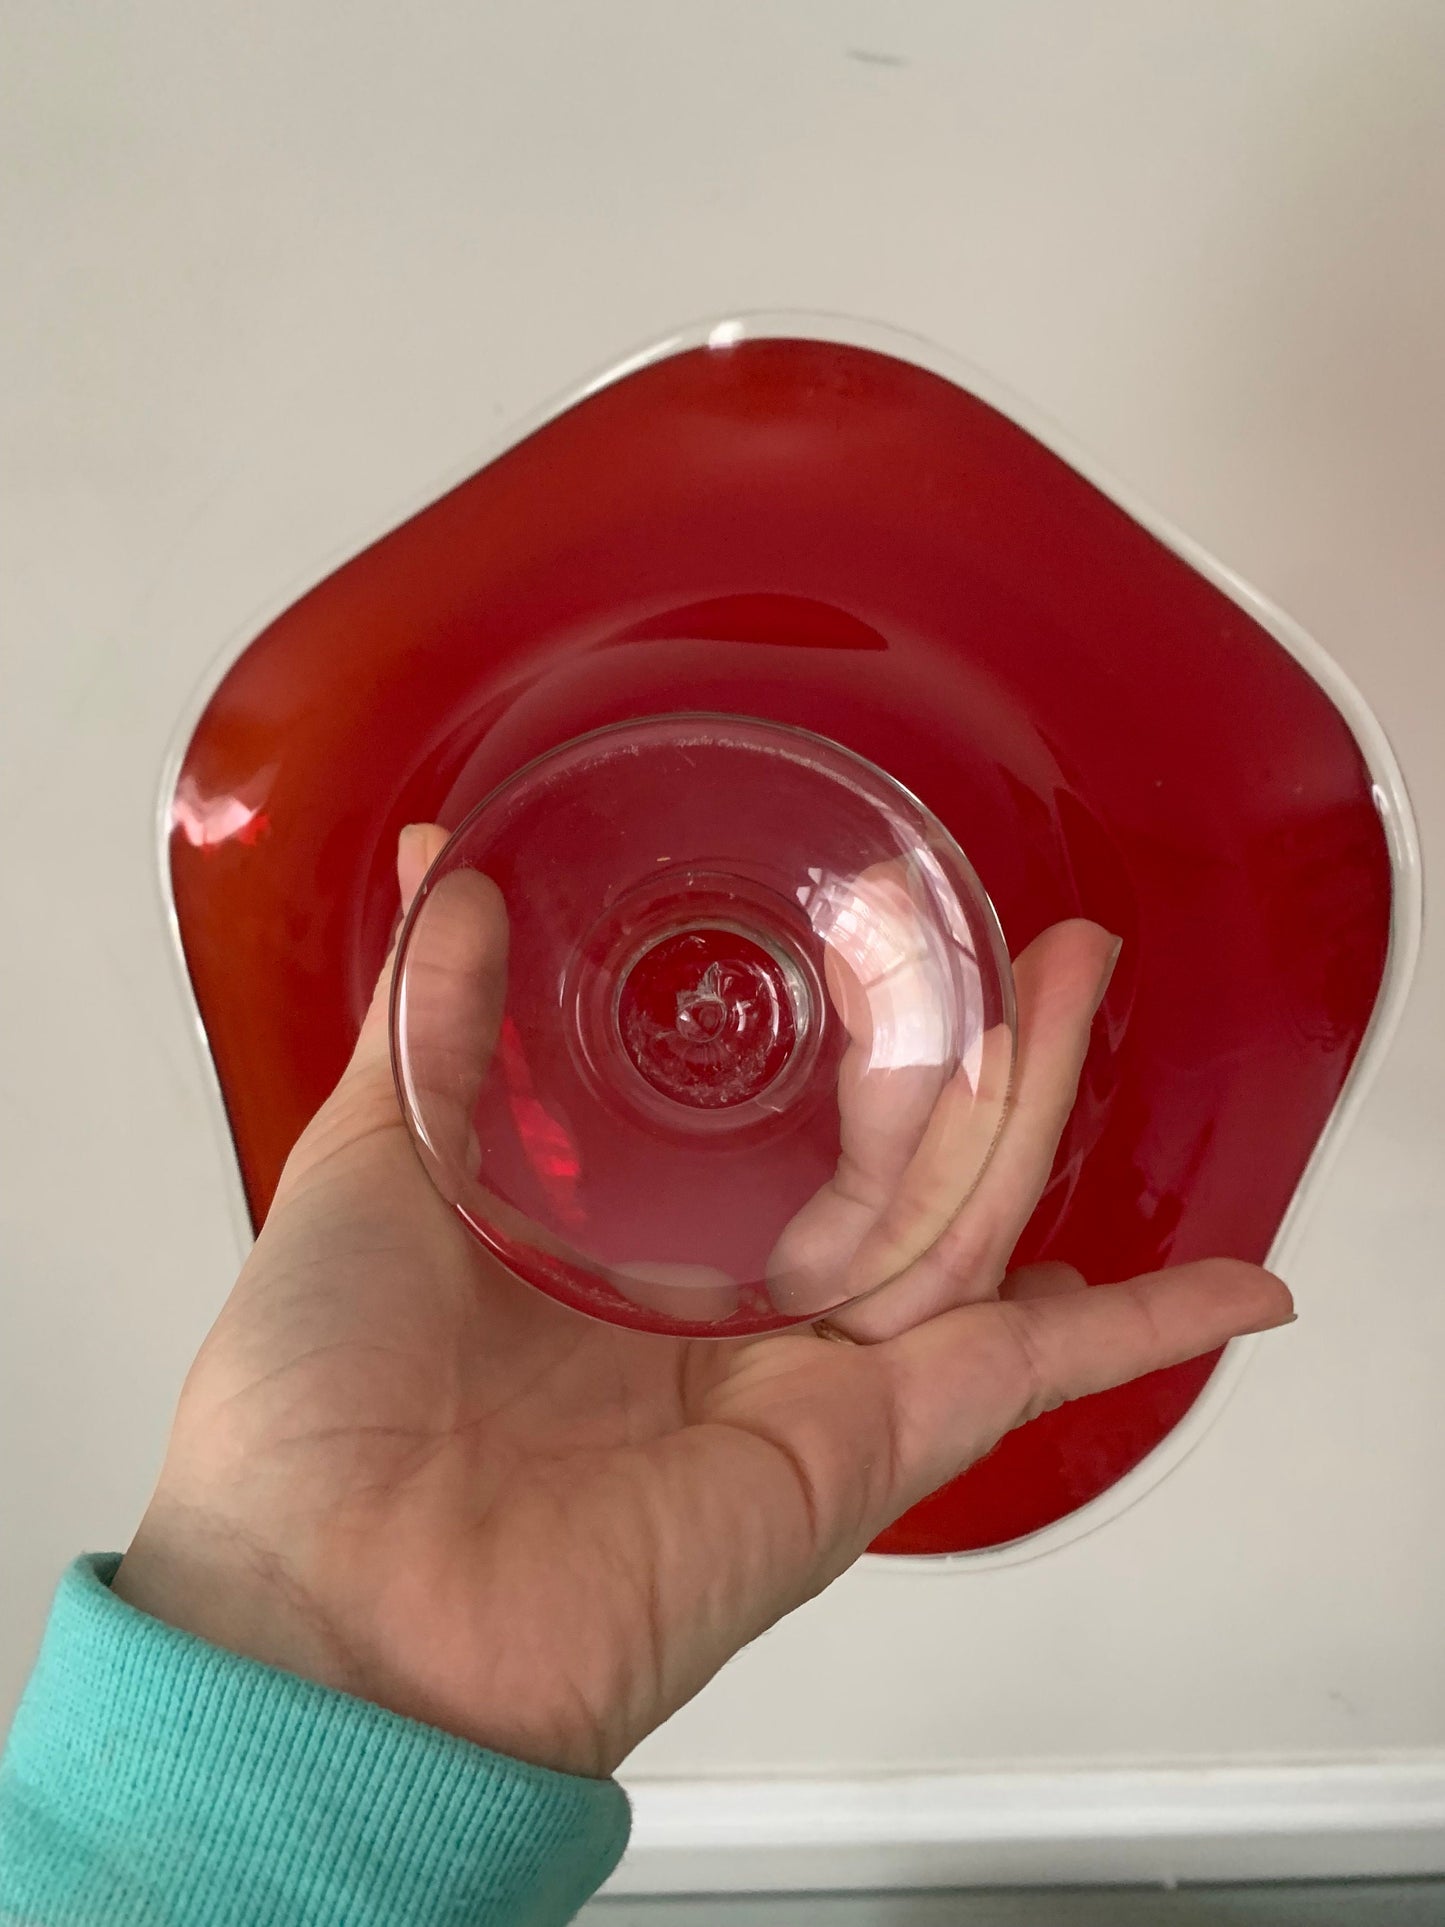 Vintage Scalloped Edge Red Glass Pedestal Bowl